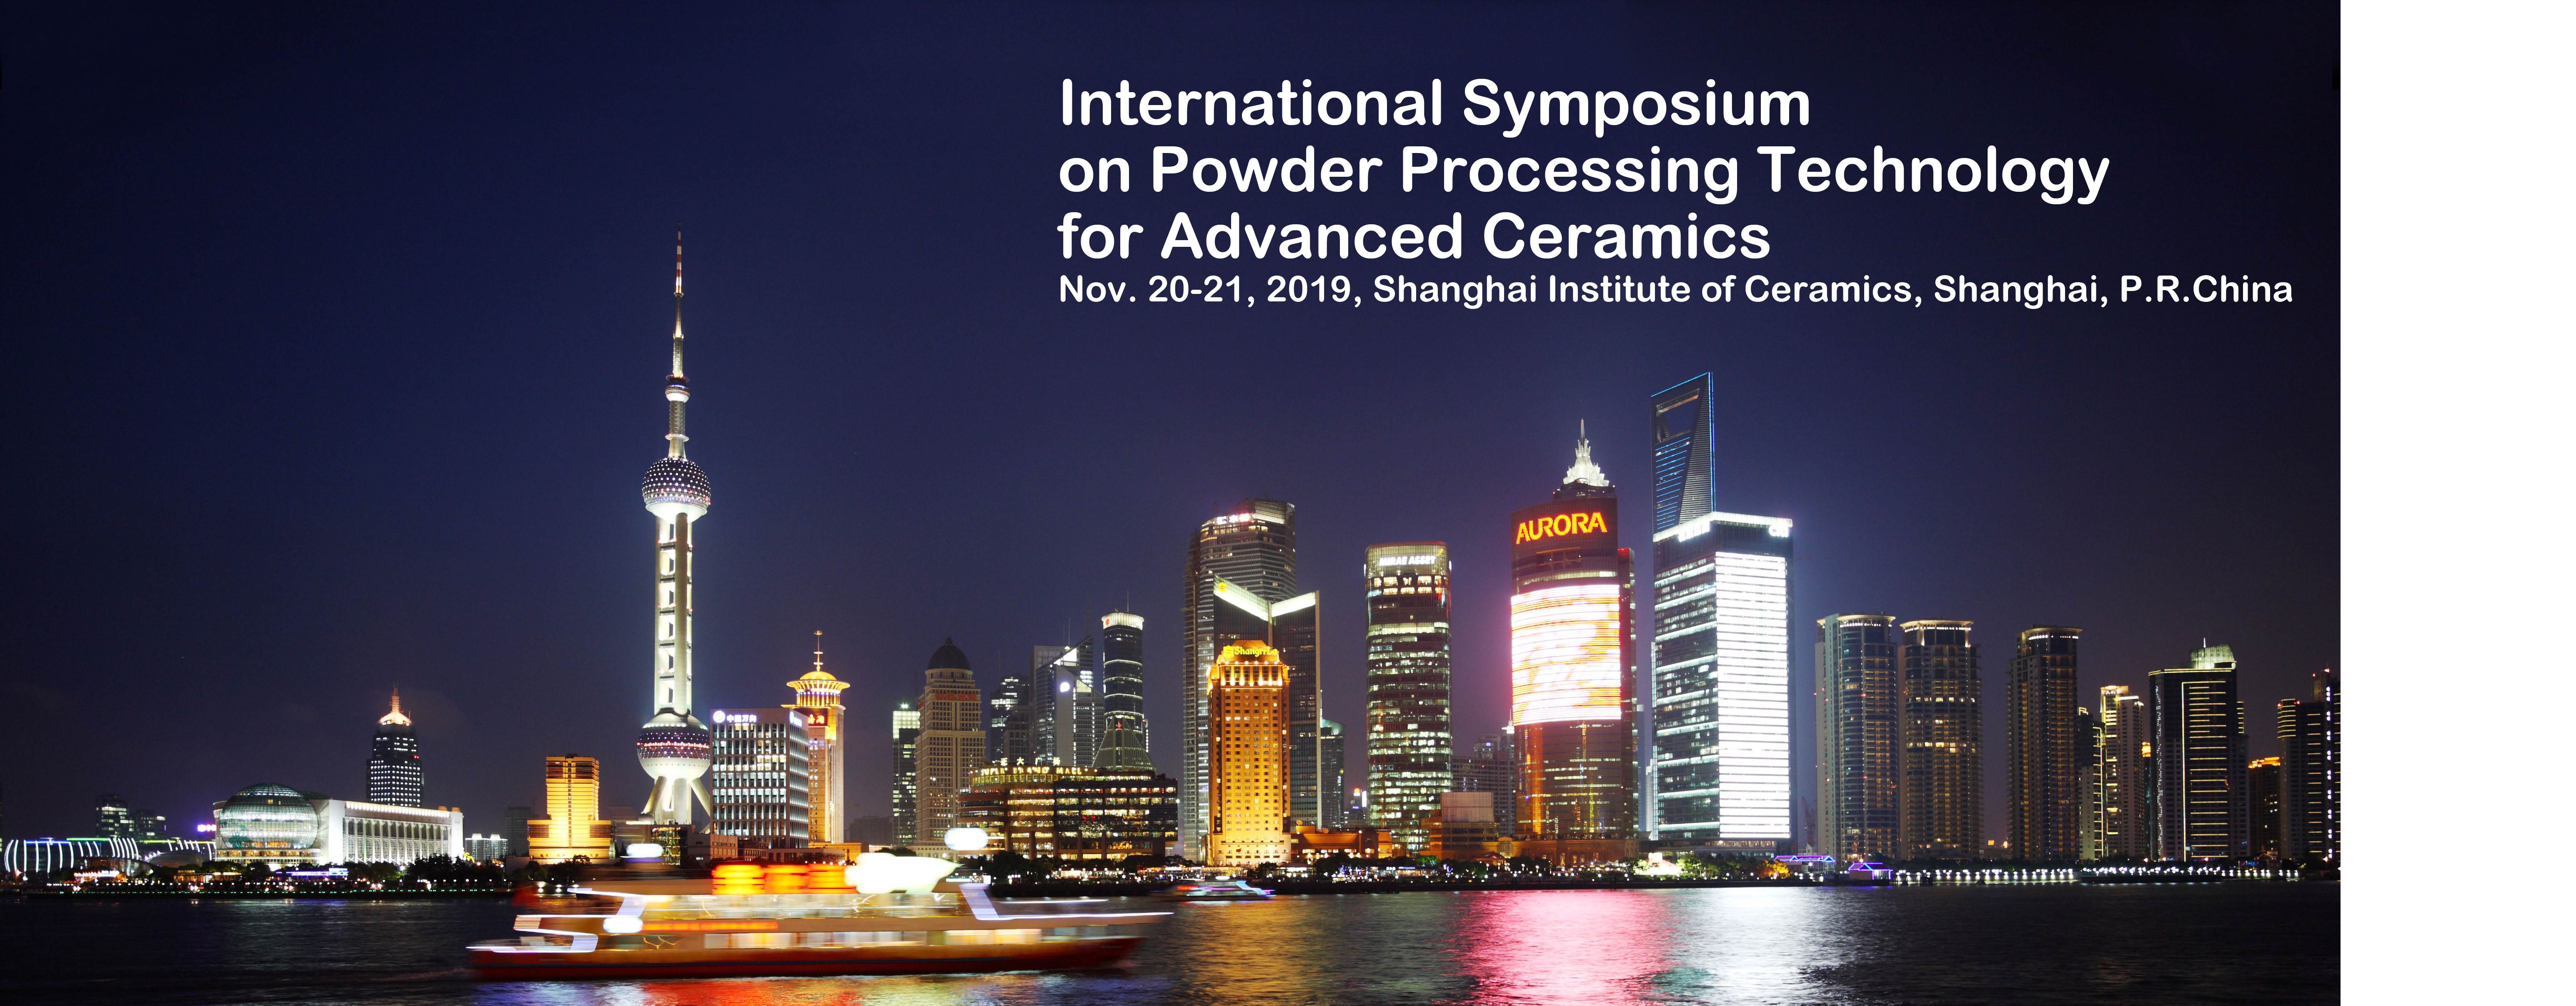 International Symposium on Powder Processing Technology for Advanced Ceramics